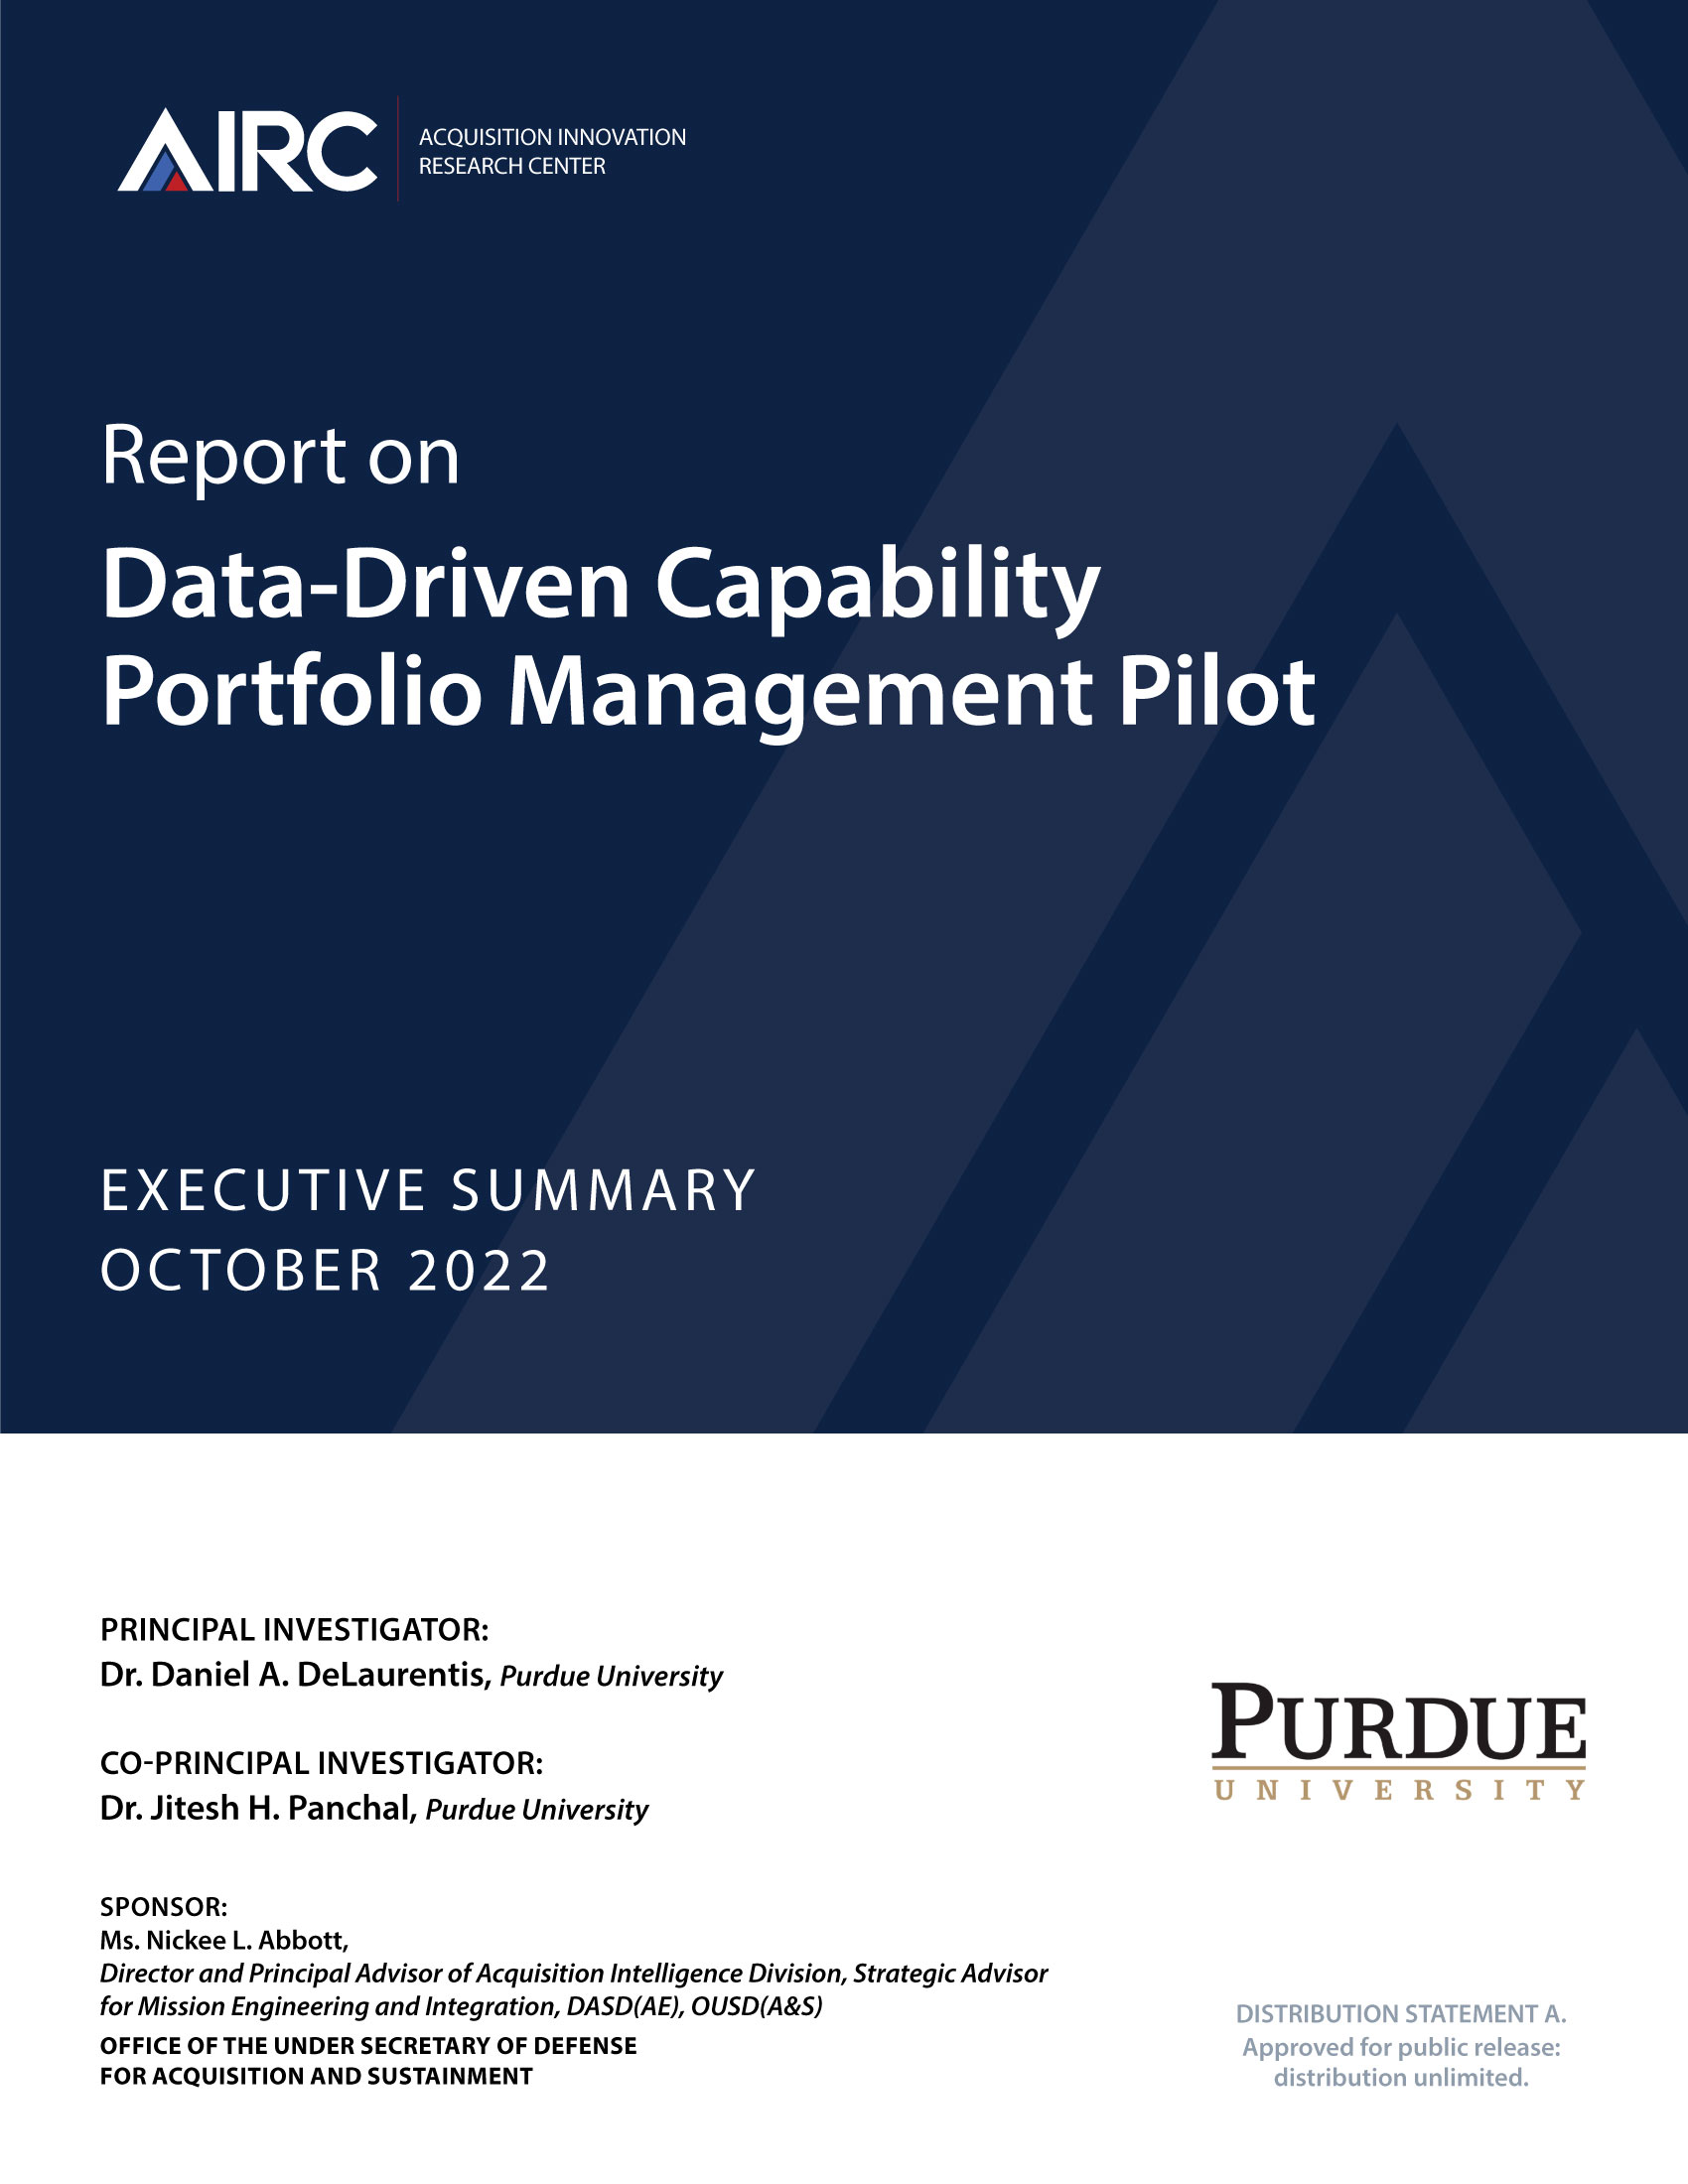 Data-Driven Capability Portfolio Management Pilot - The Acquisition  Innovation Research Center